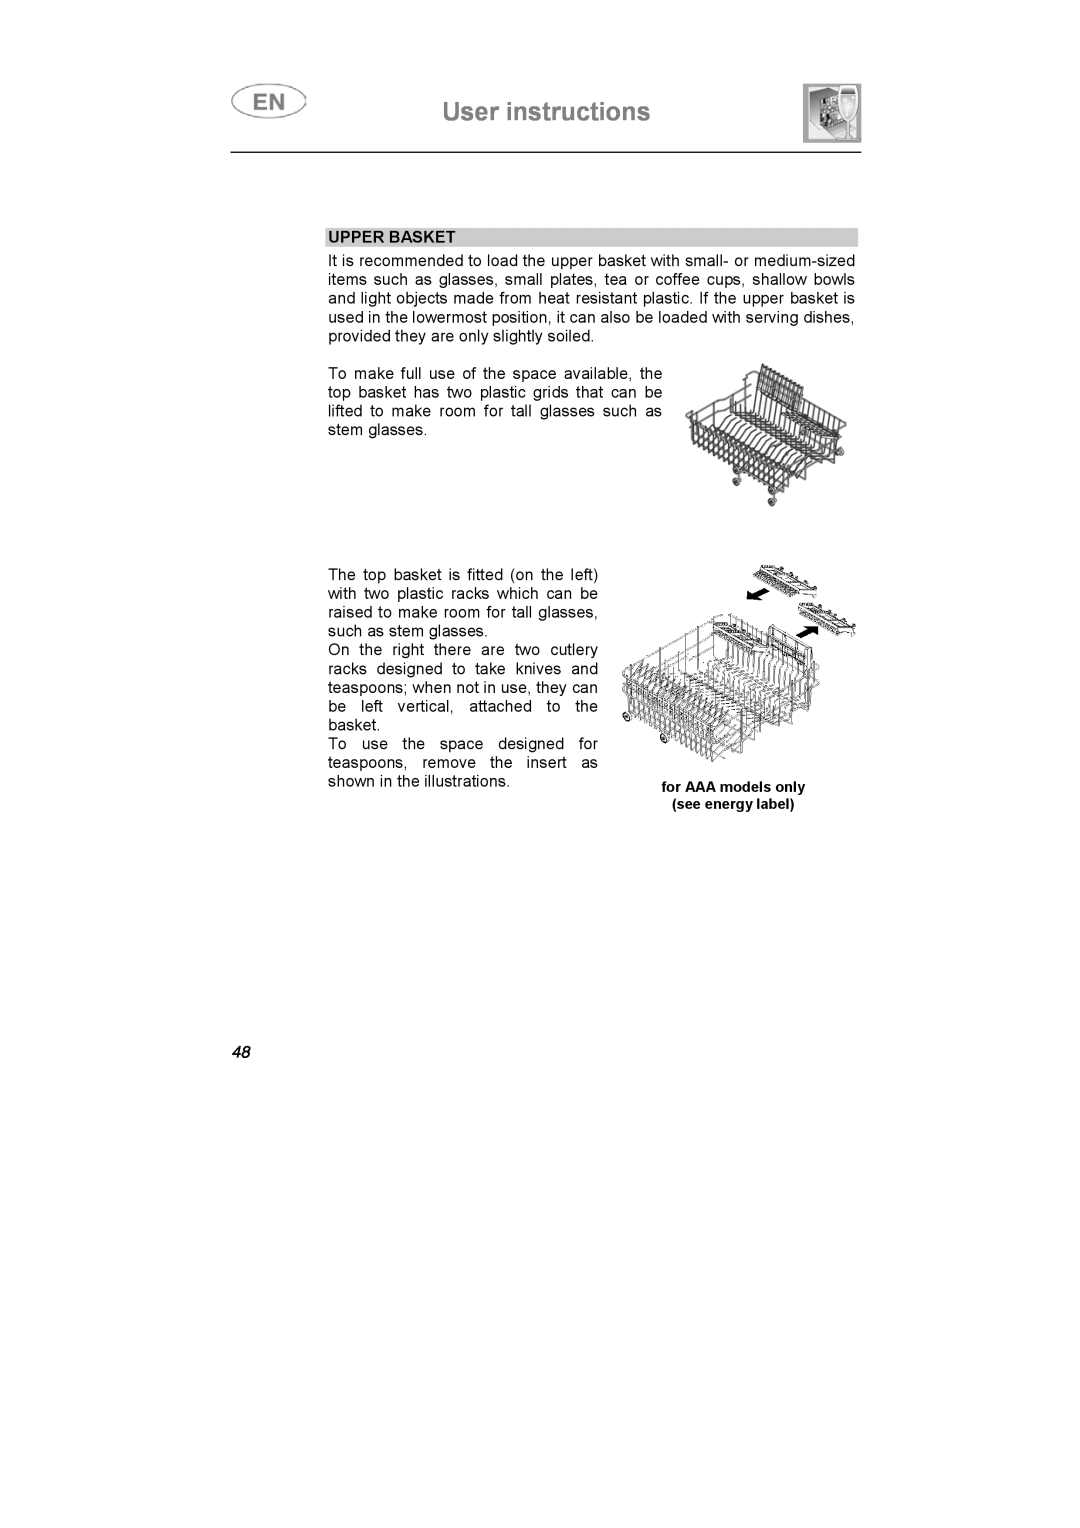 Smeg STA613 instruction manual User instructions, Upper Basket 